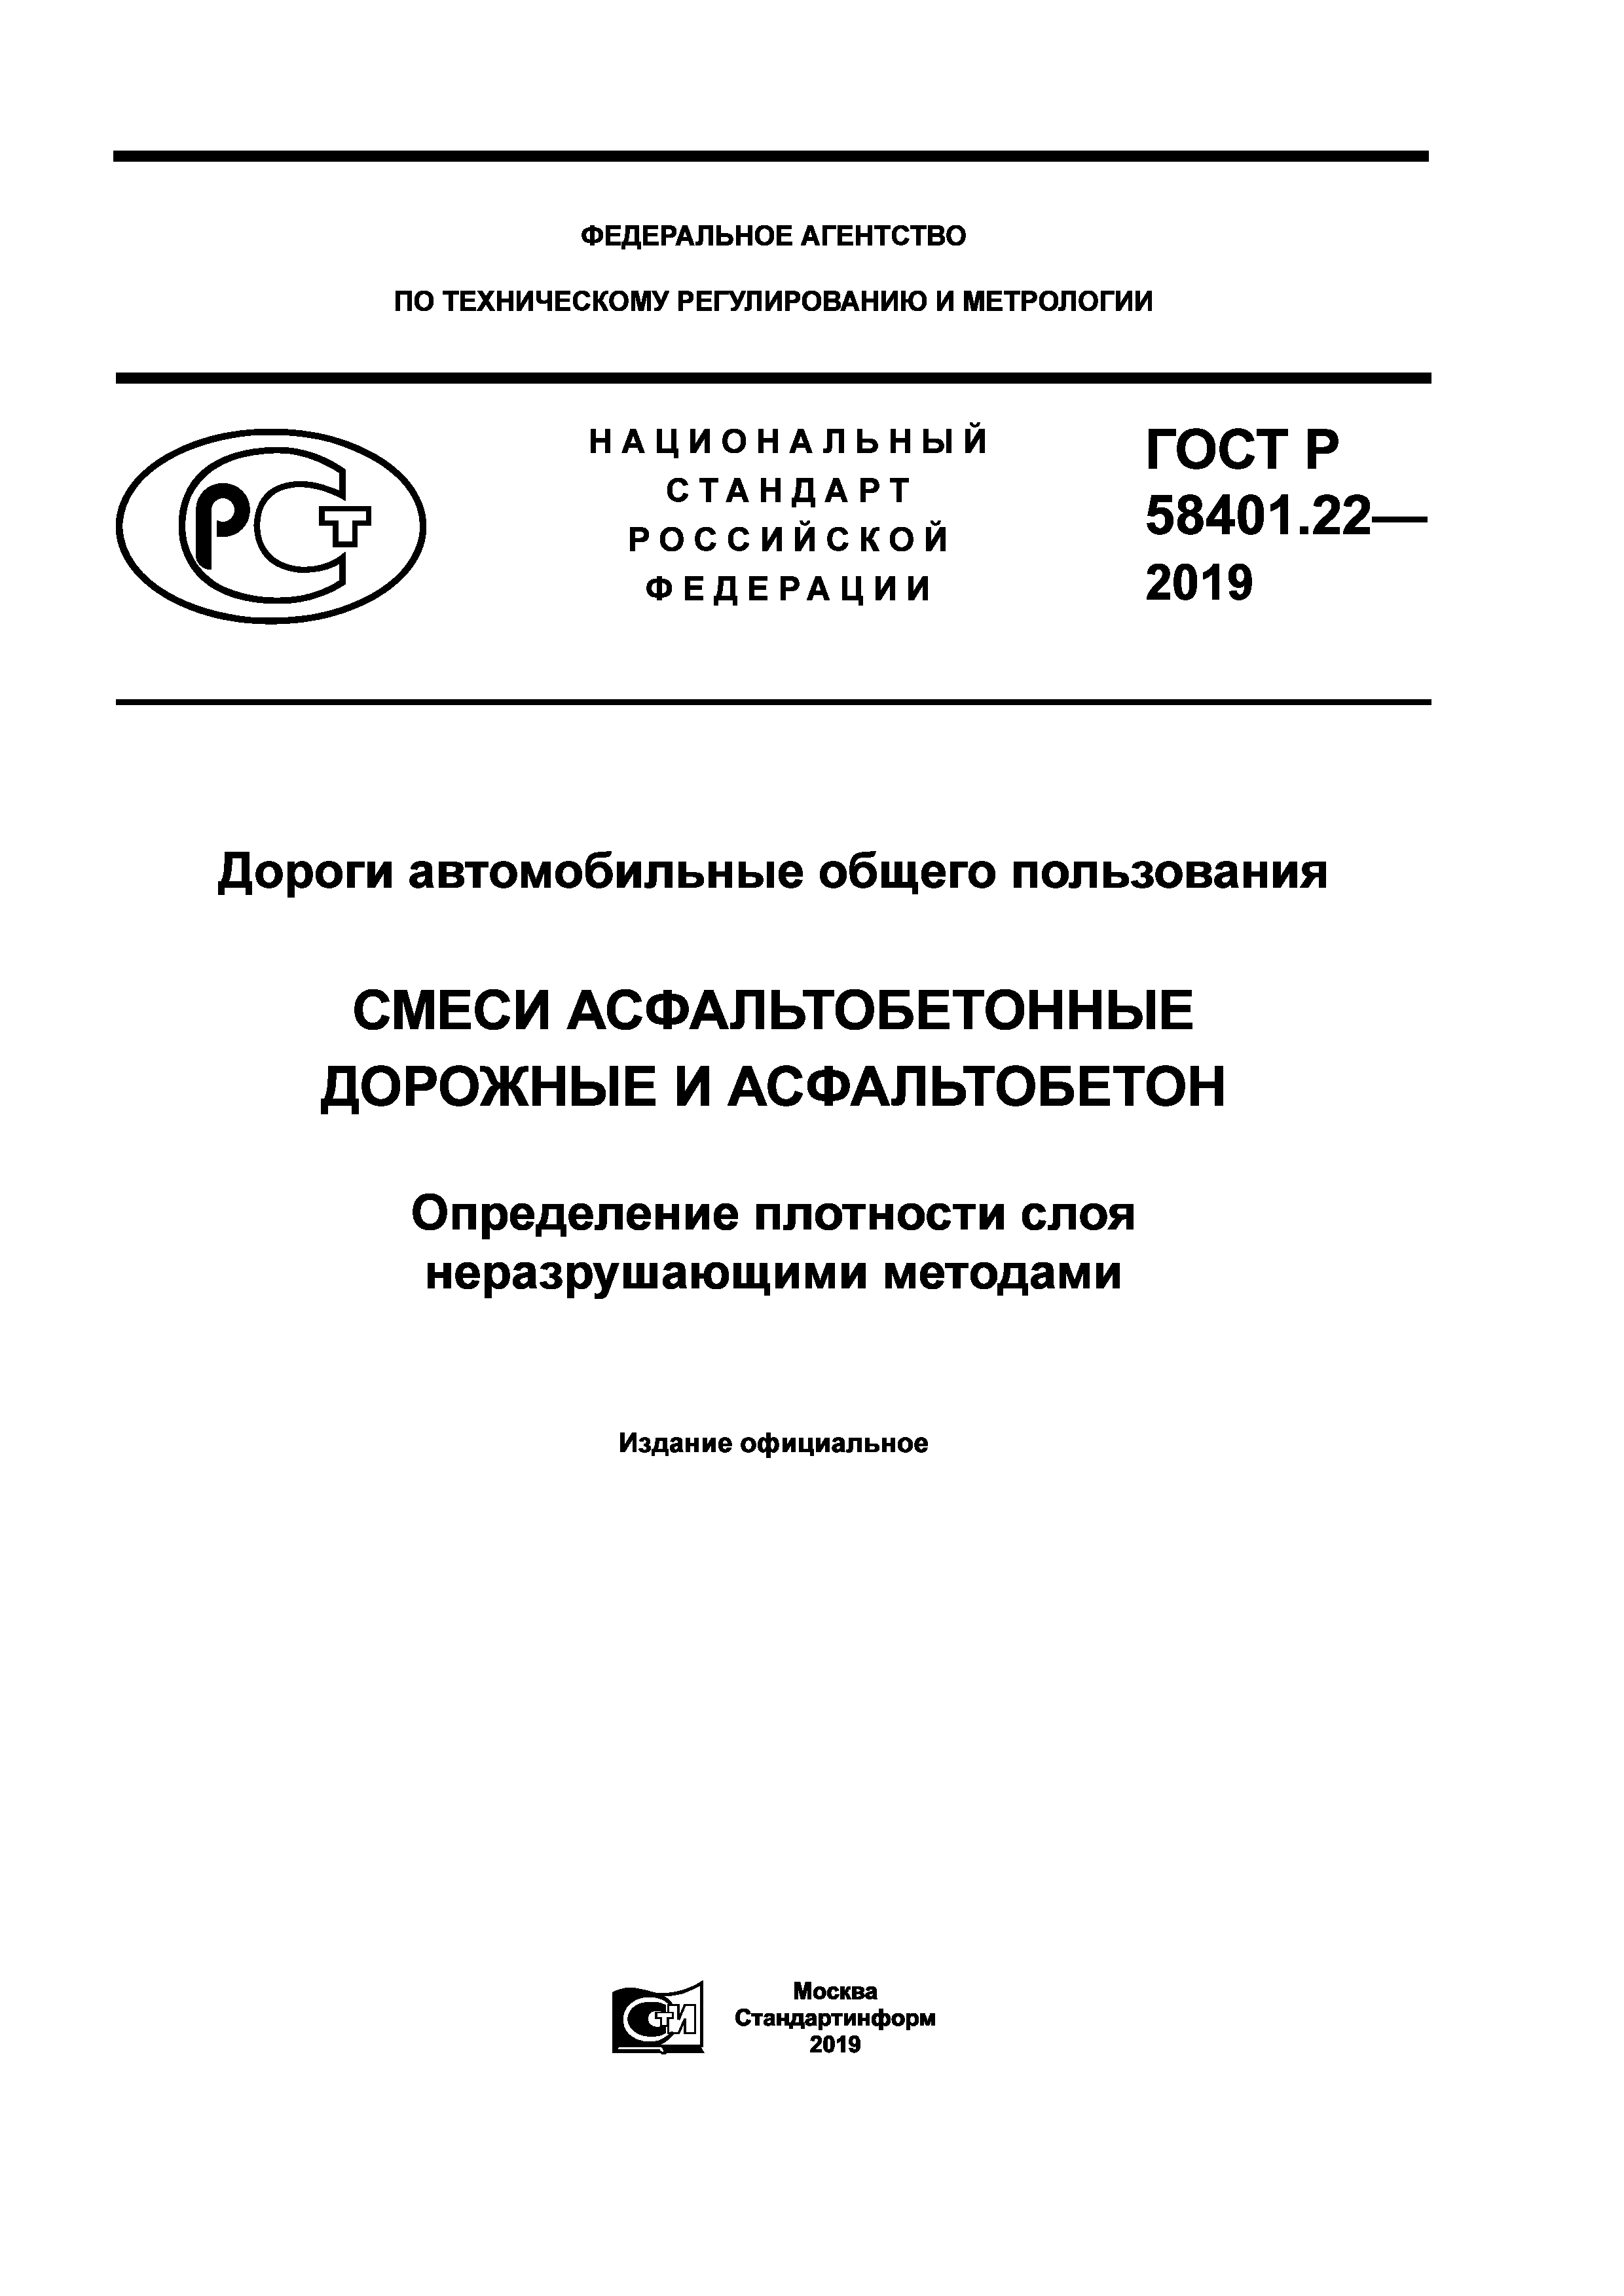 ГОСТ Р 58401.22-2019